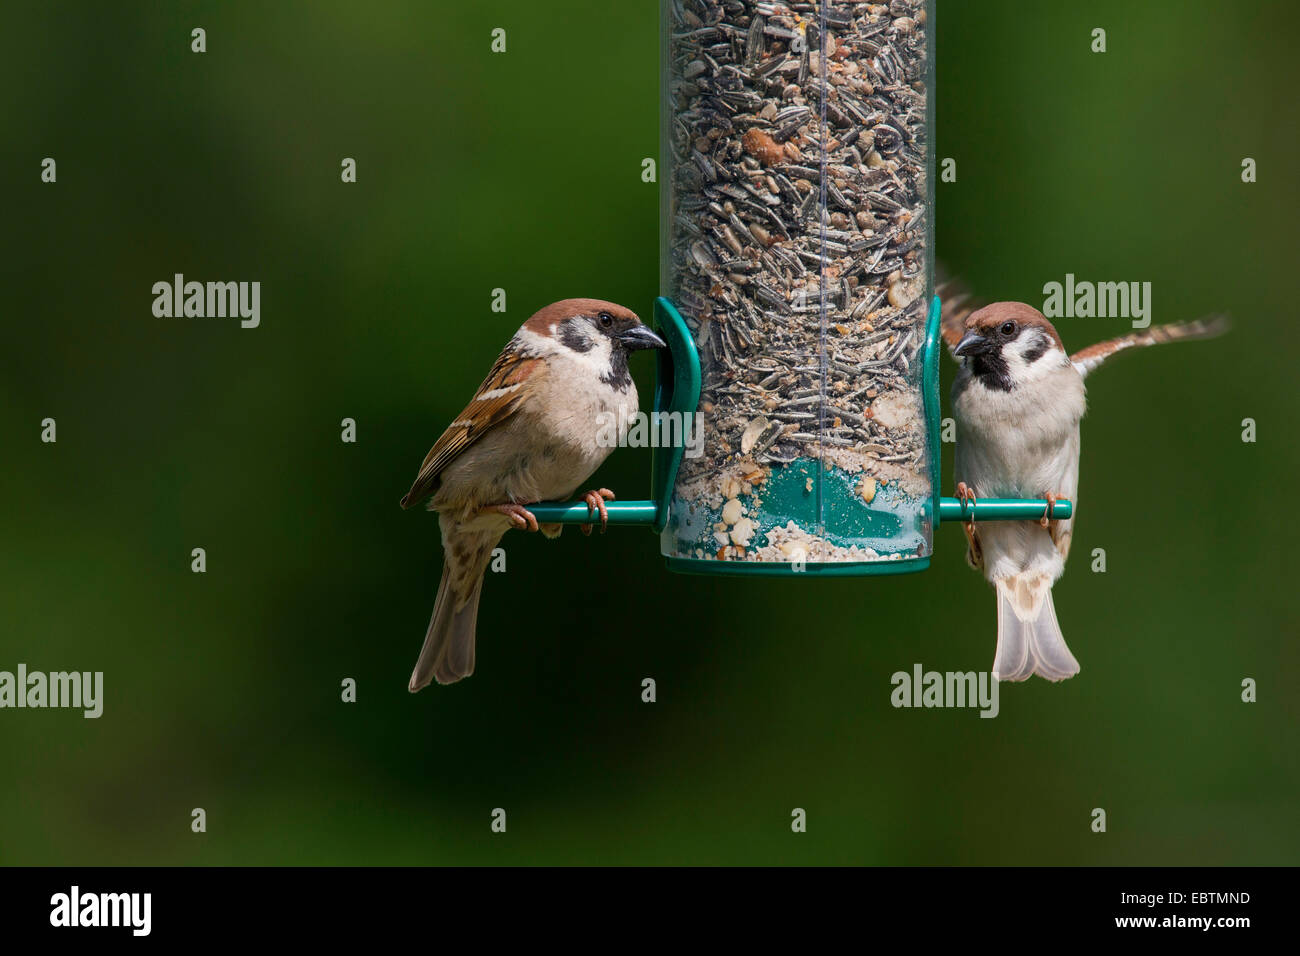 Eurasian tree sparrow (Passer montanus), tree sparrows feed grains from a bird feeder, Germany Stock Photo